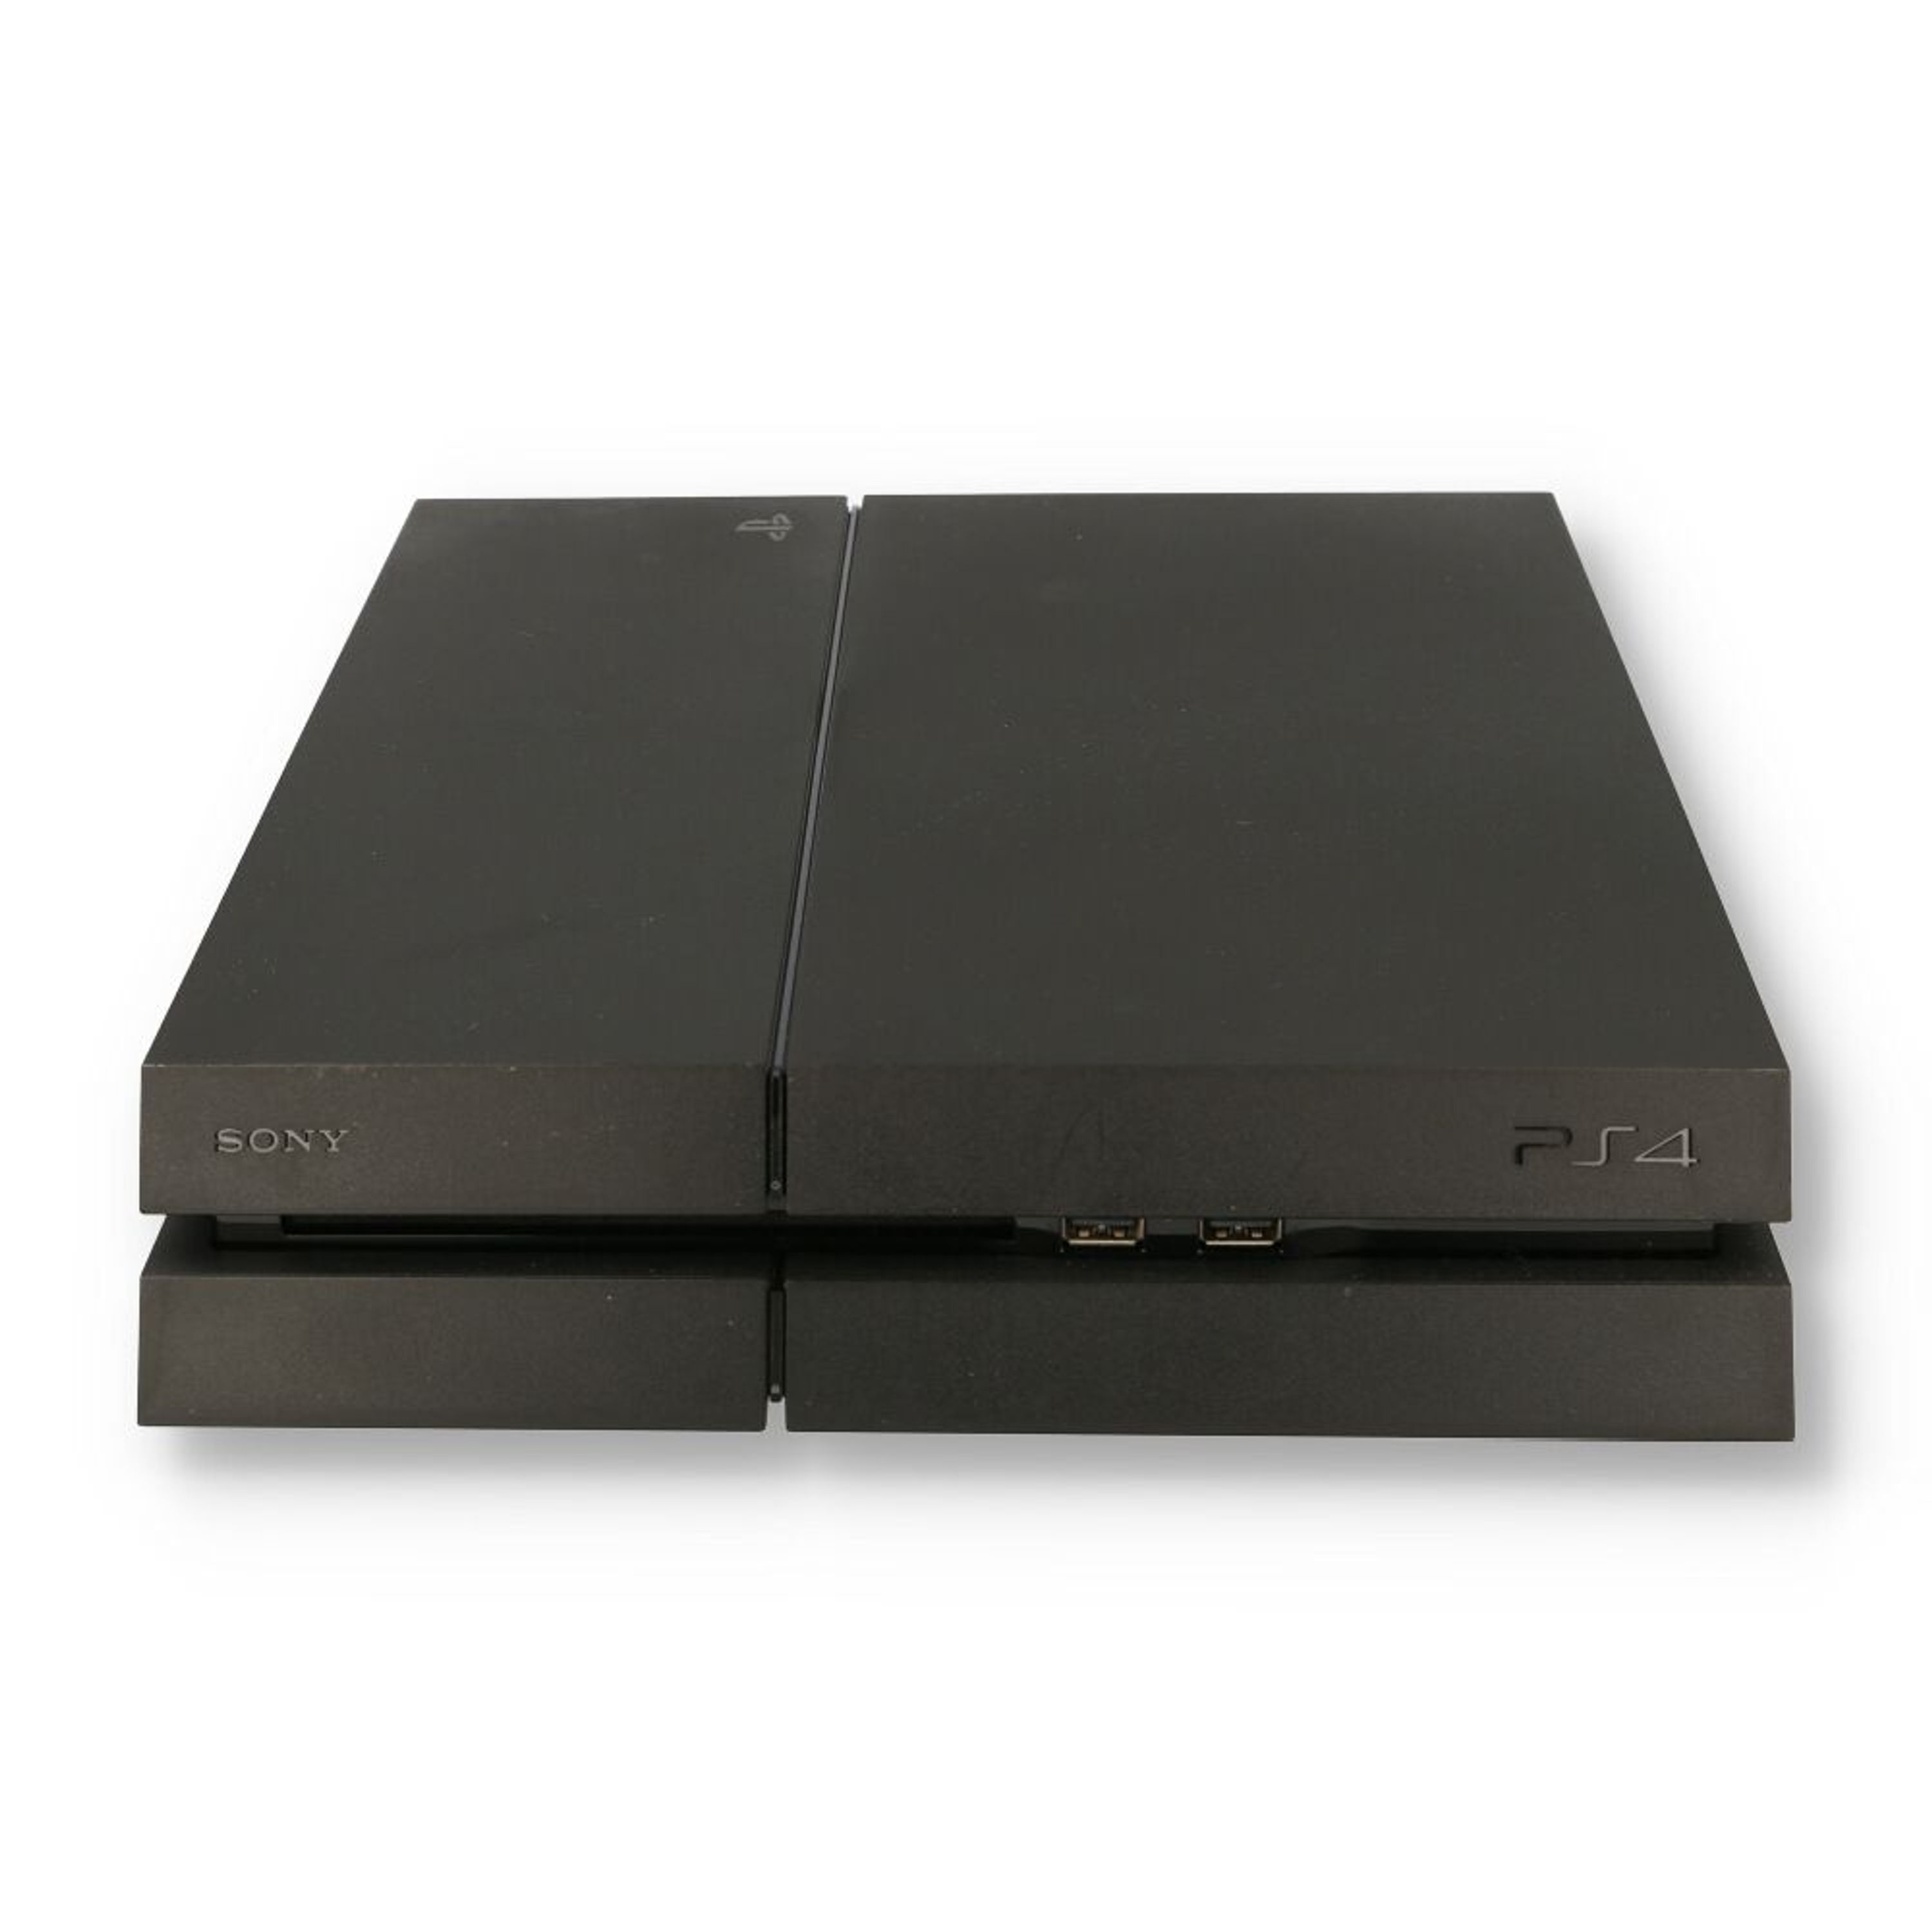 PS4 Konsole Modell Cuh-1116A 500Gb in Schwarz #31 + Stromkabel + HDMI